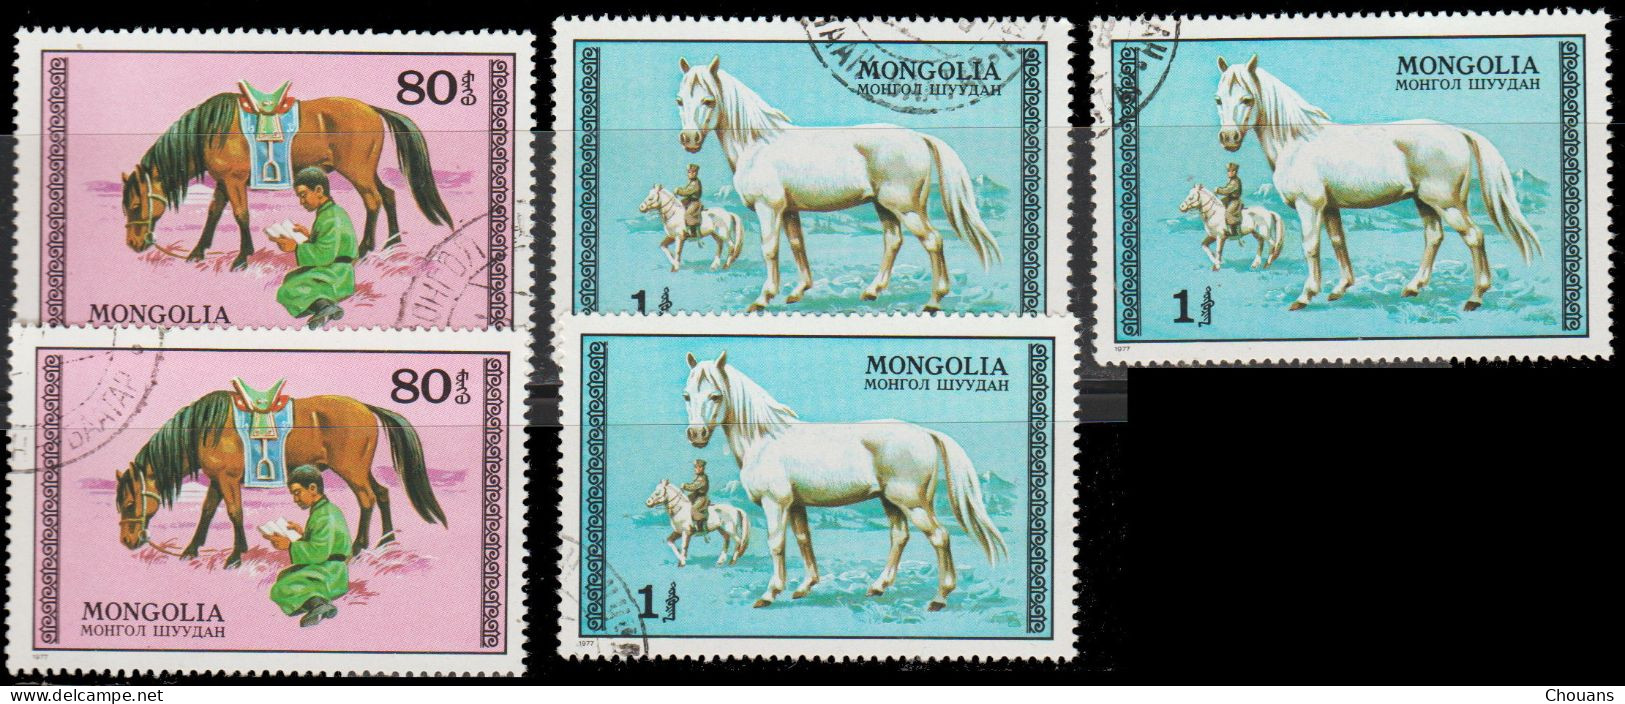 Mongolie 1977. ~ YT 889 + 891x2 + 892x3  - Chevaux - Mongolia